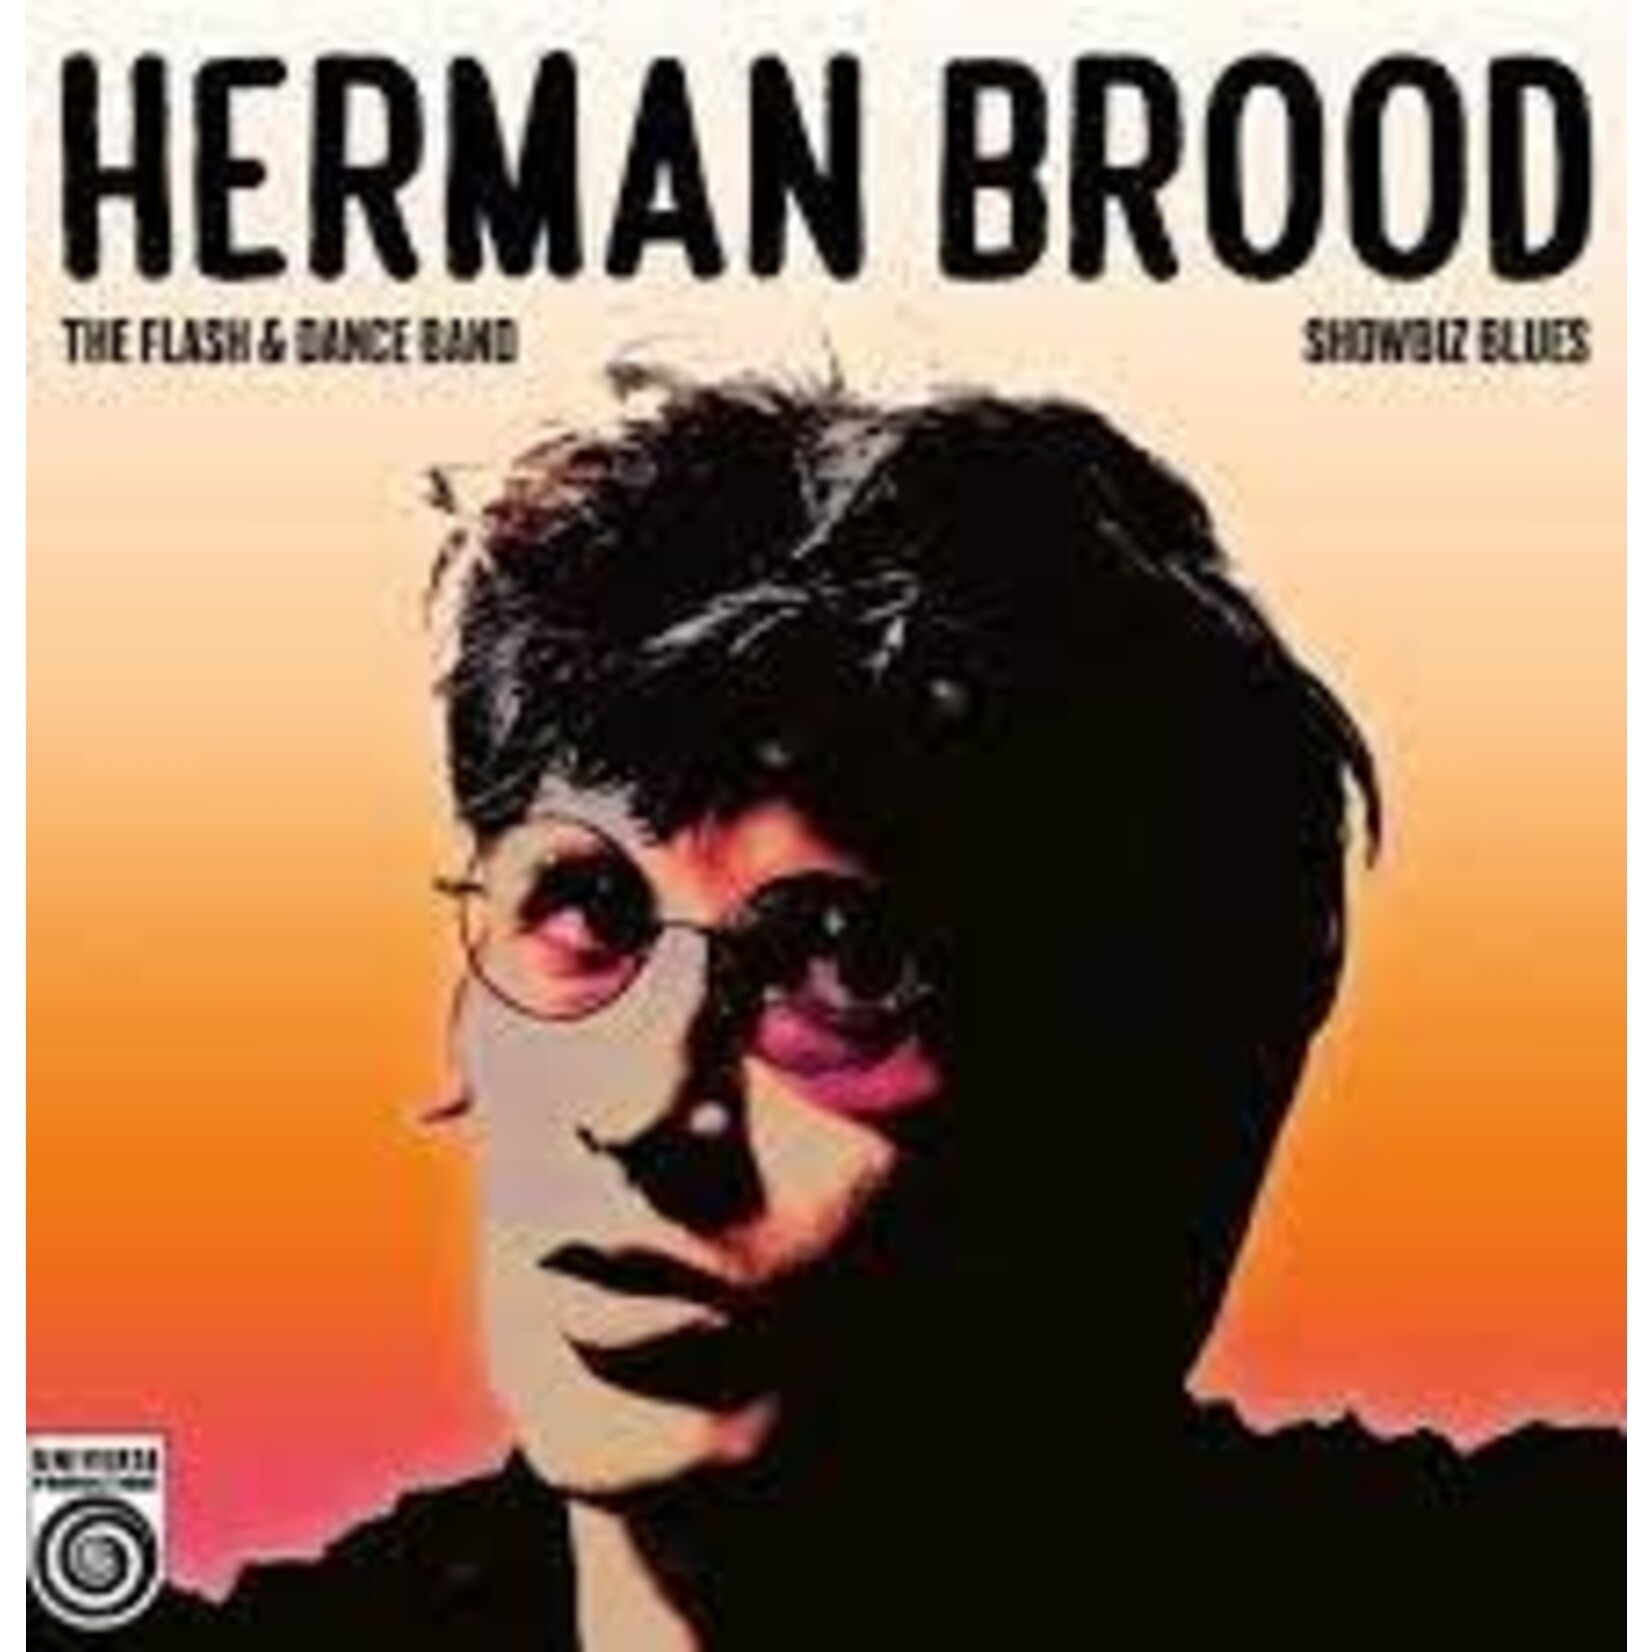 HERMAN BROOD & THE FLESH &DANCE BAND - SHOWBIZZ BLUES LTD.